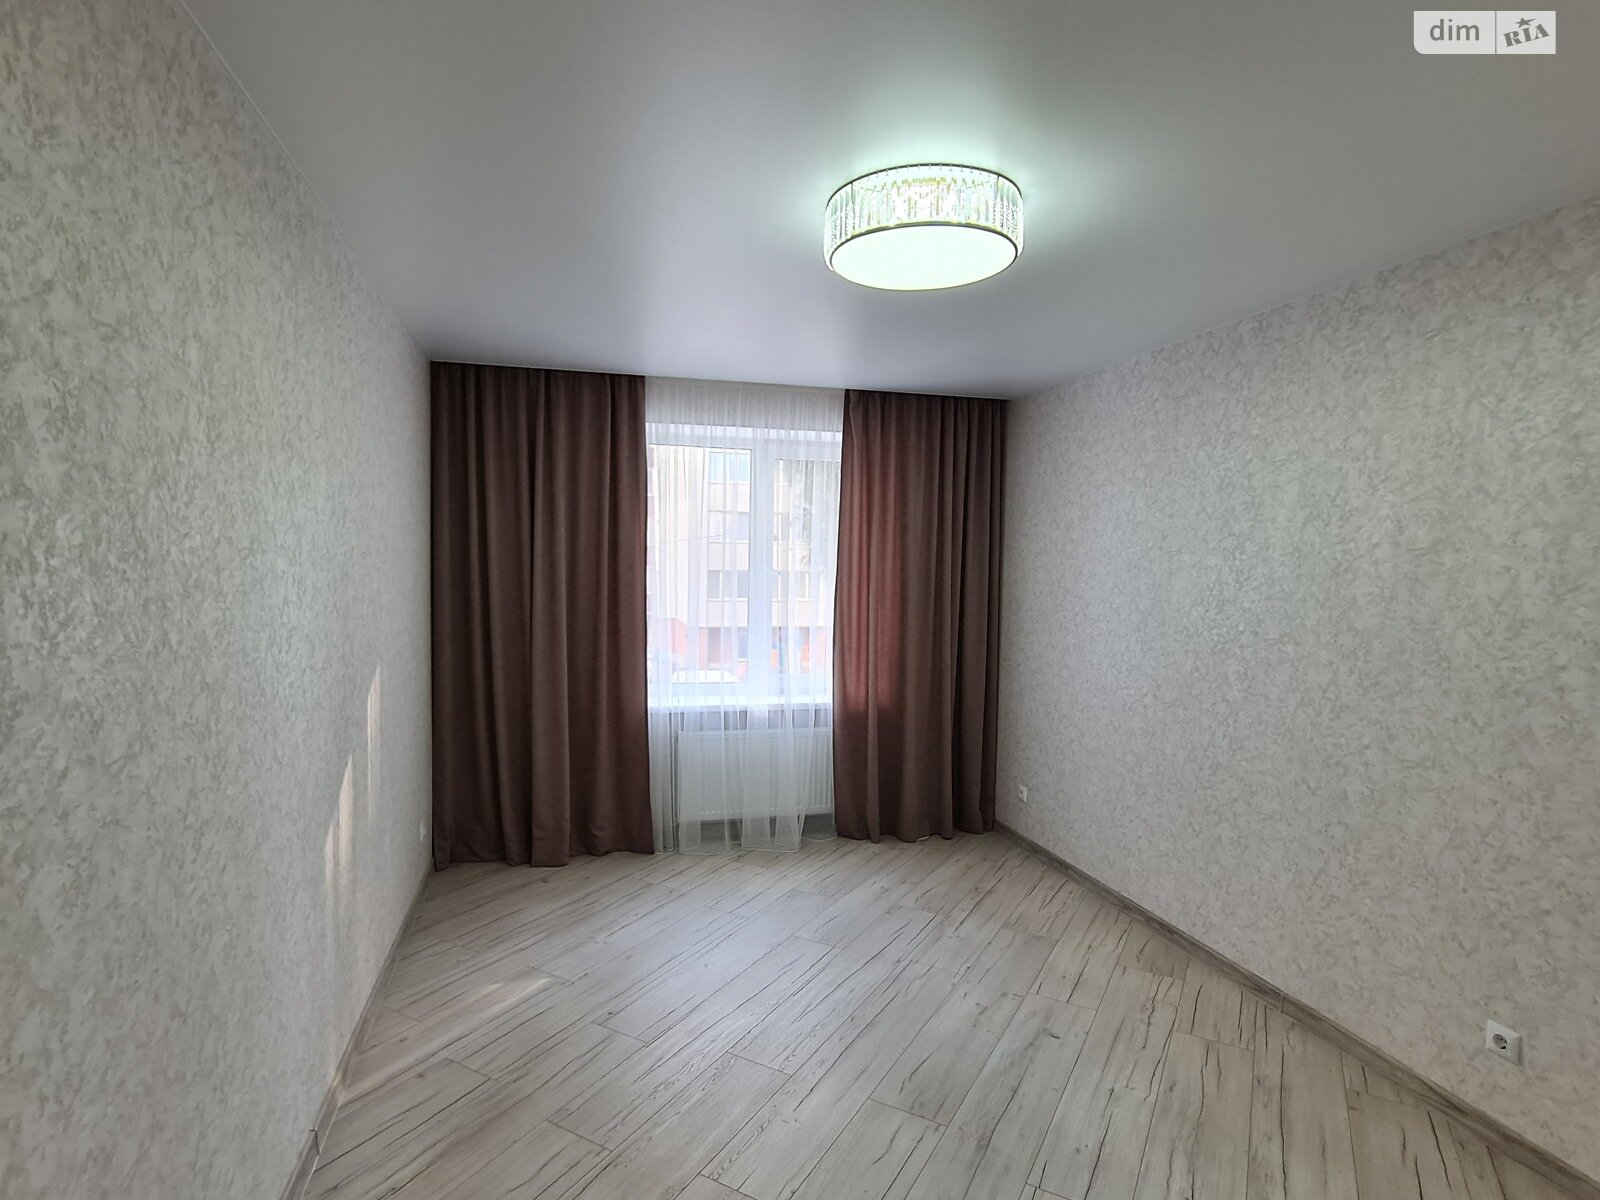 Продаж двокімнатної квартири в Хмельницькому, на просп. Миру 63В, район Виставка фото 1